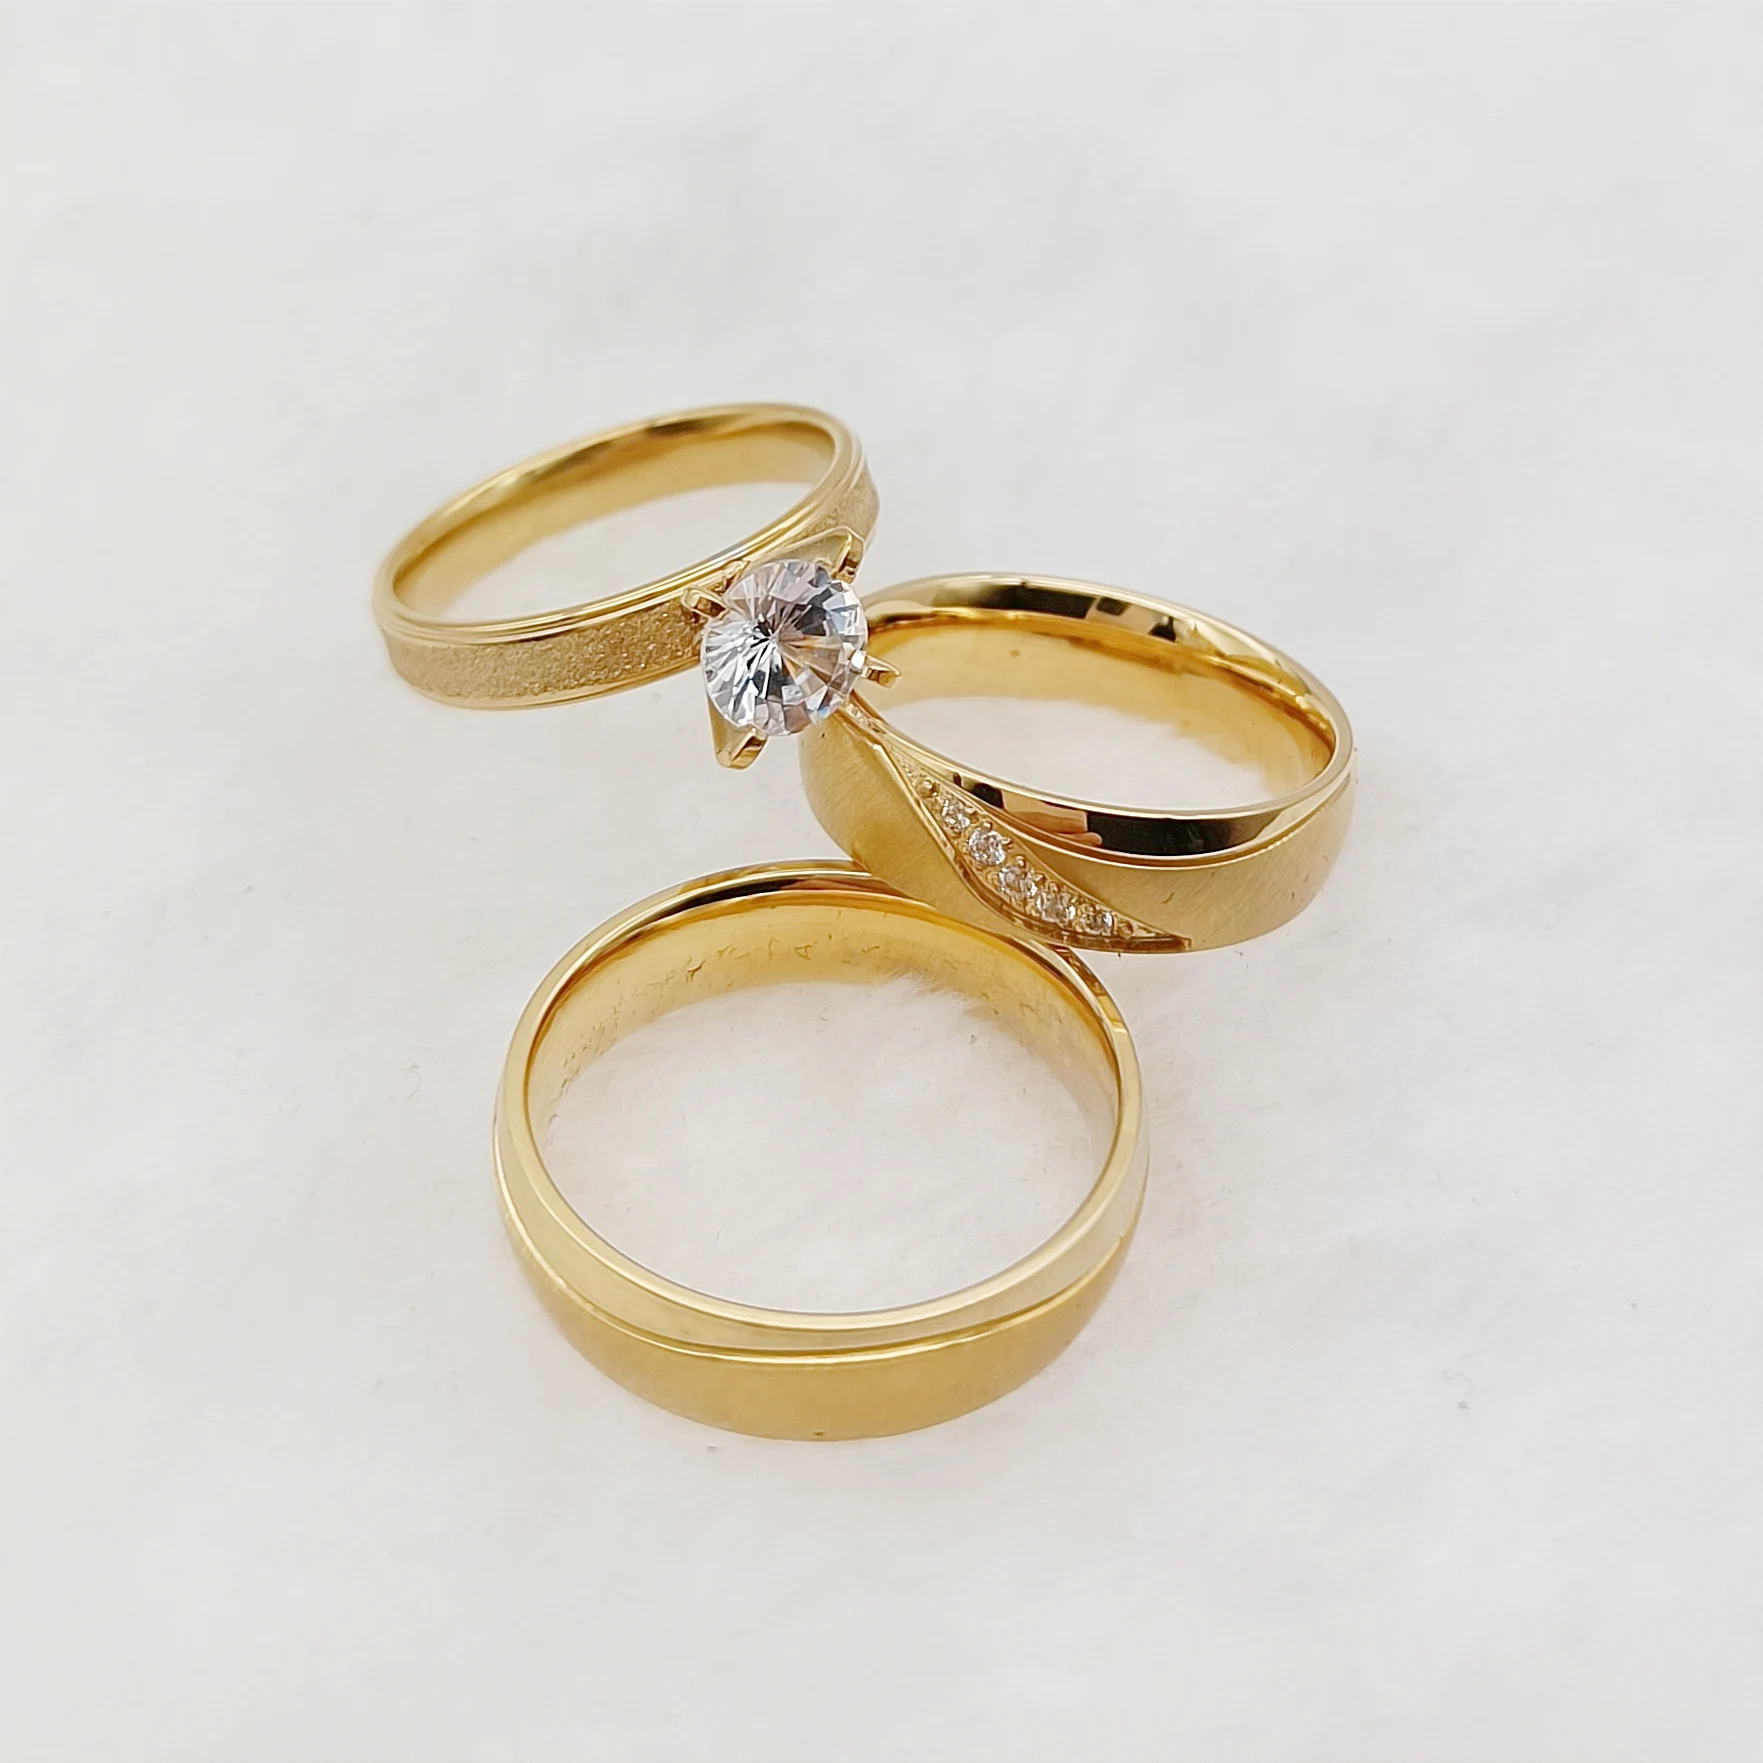 Plain wedding bands with diamond. Minimalist wedding bands